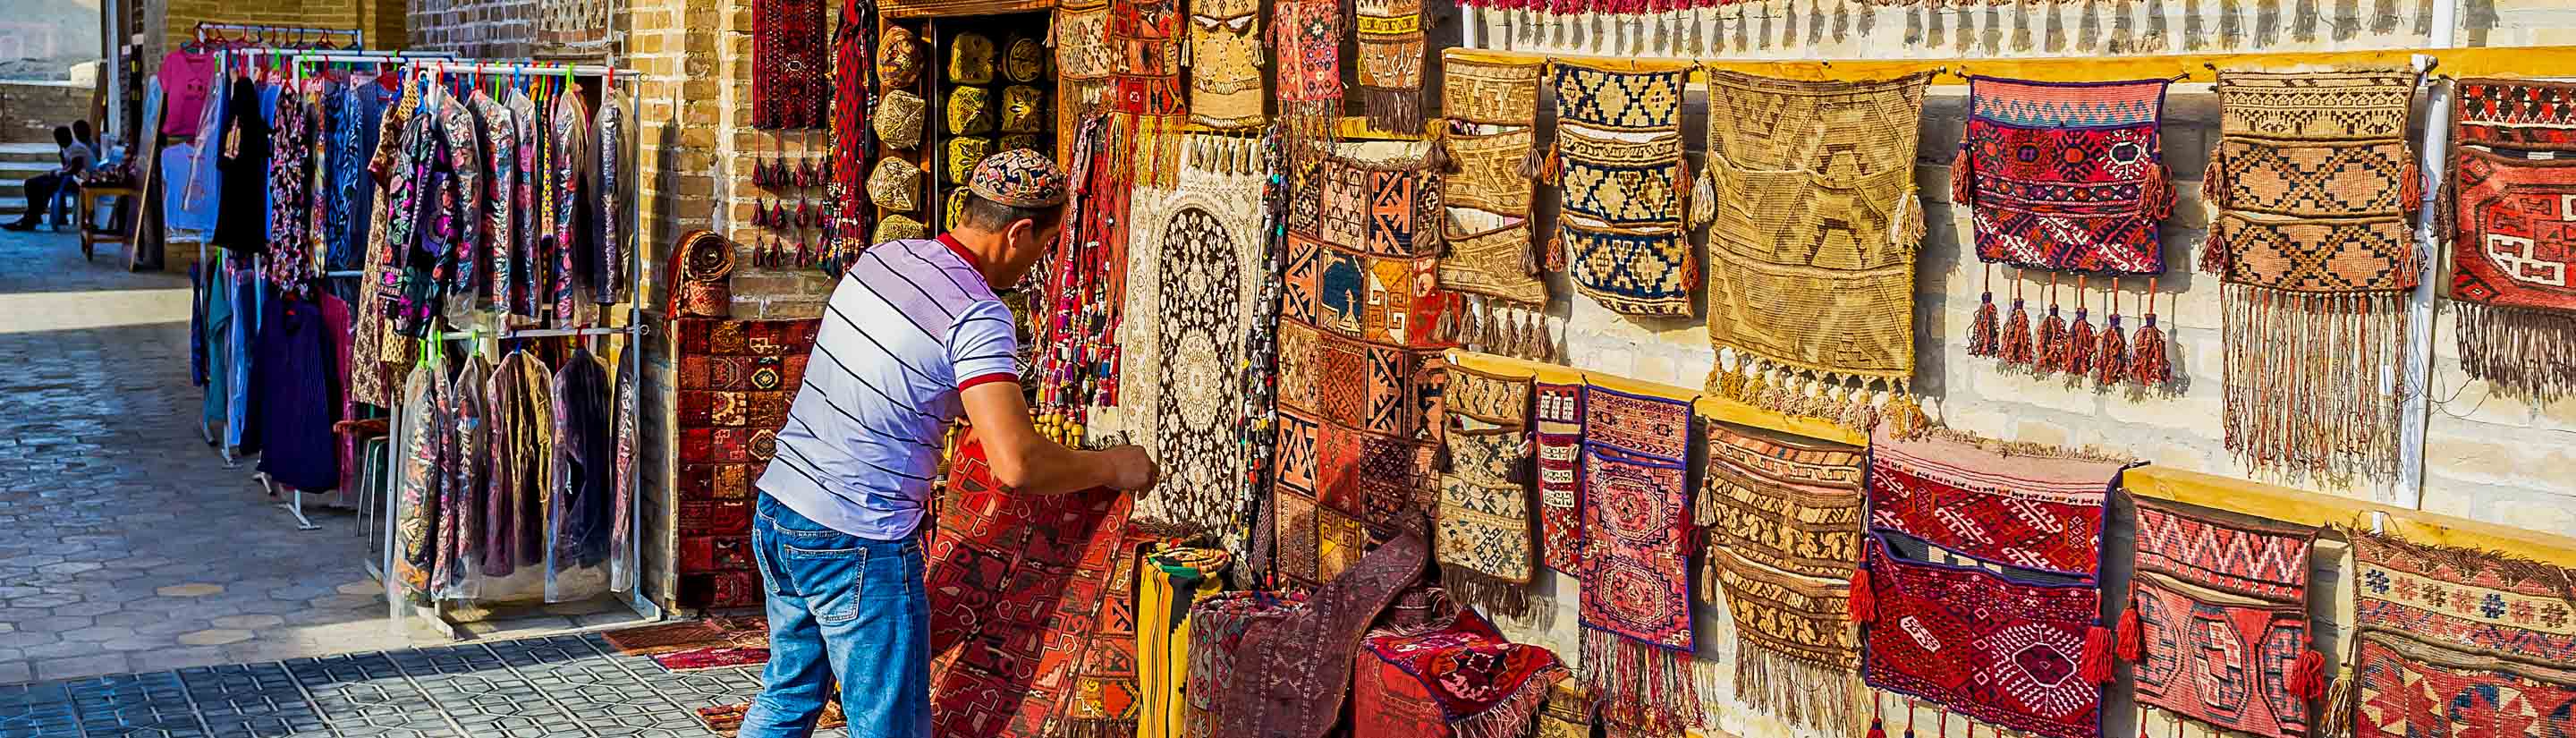 Usbekistan-Reise: Flair des Orients